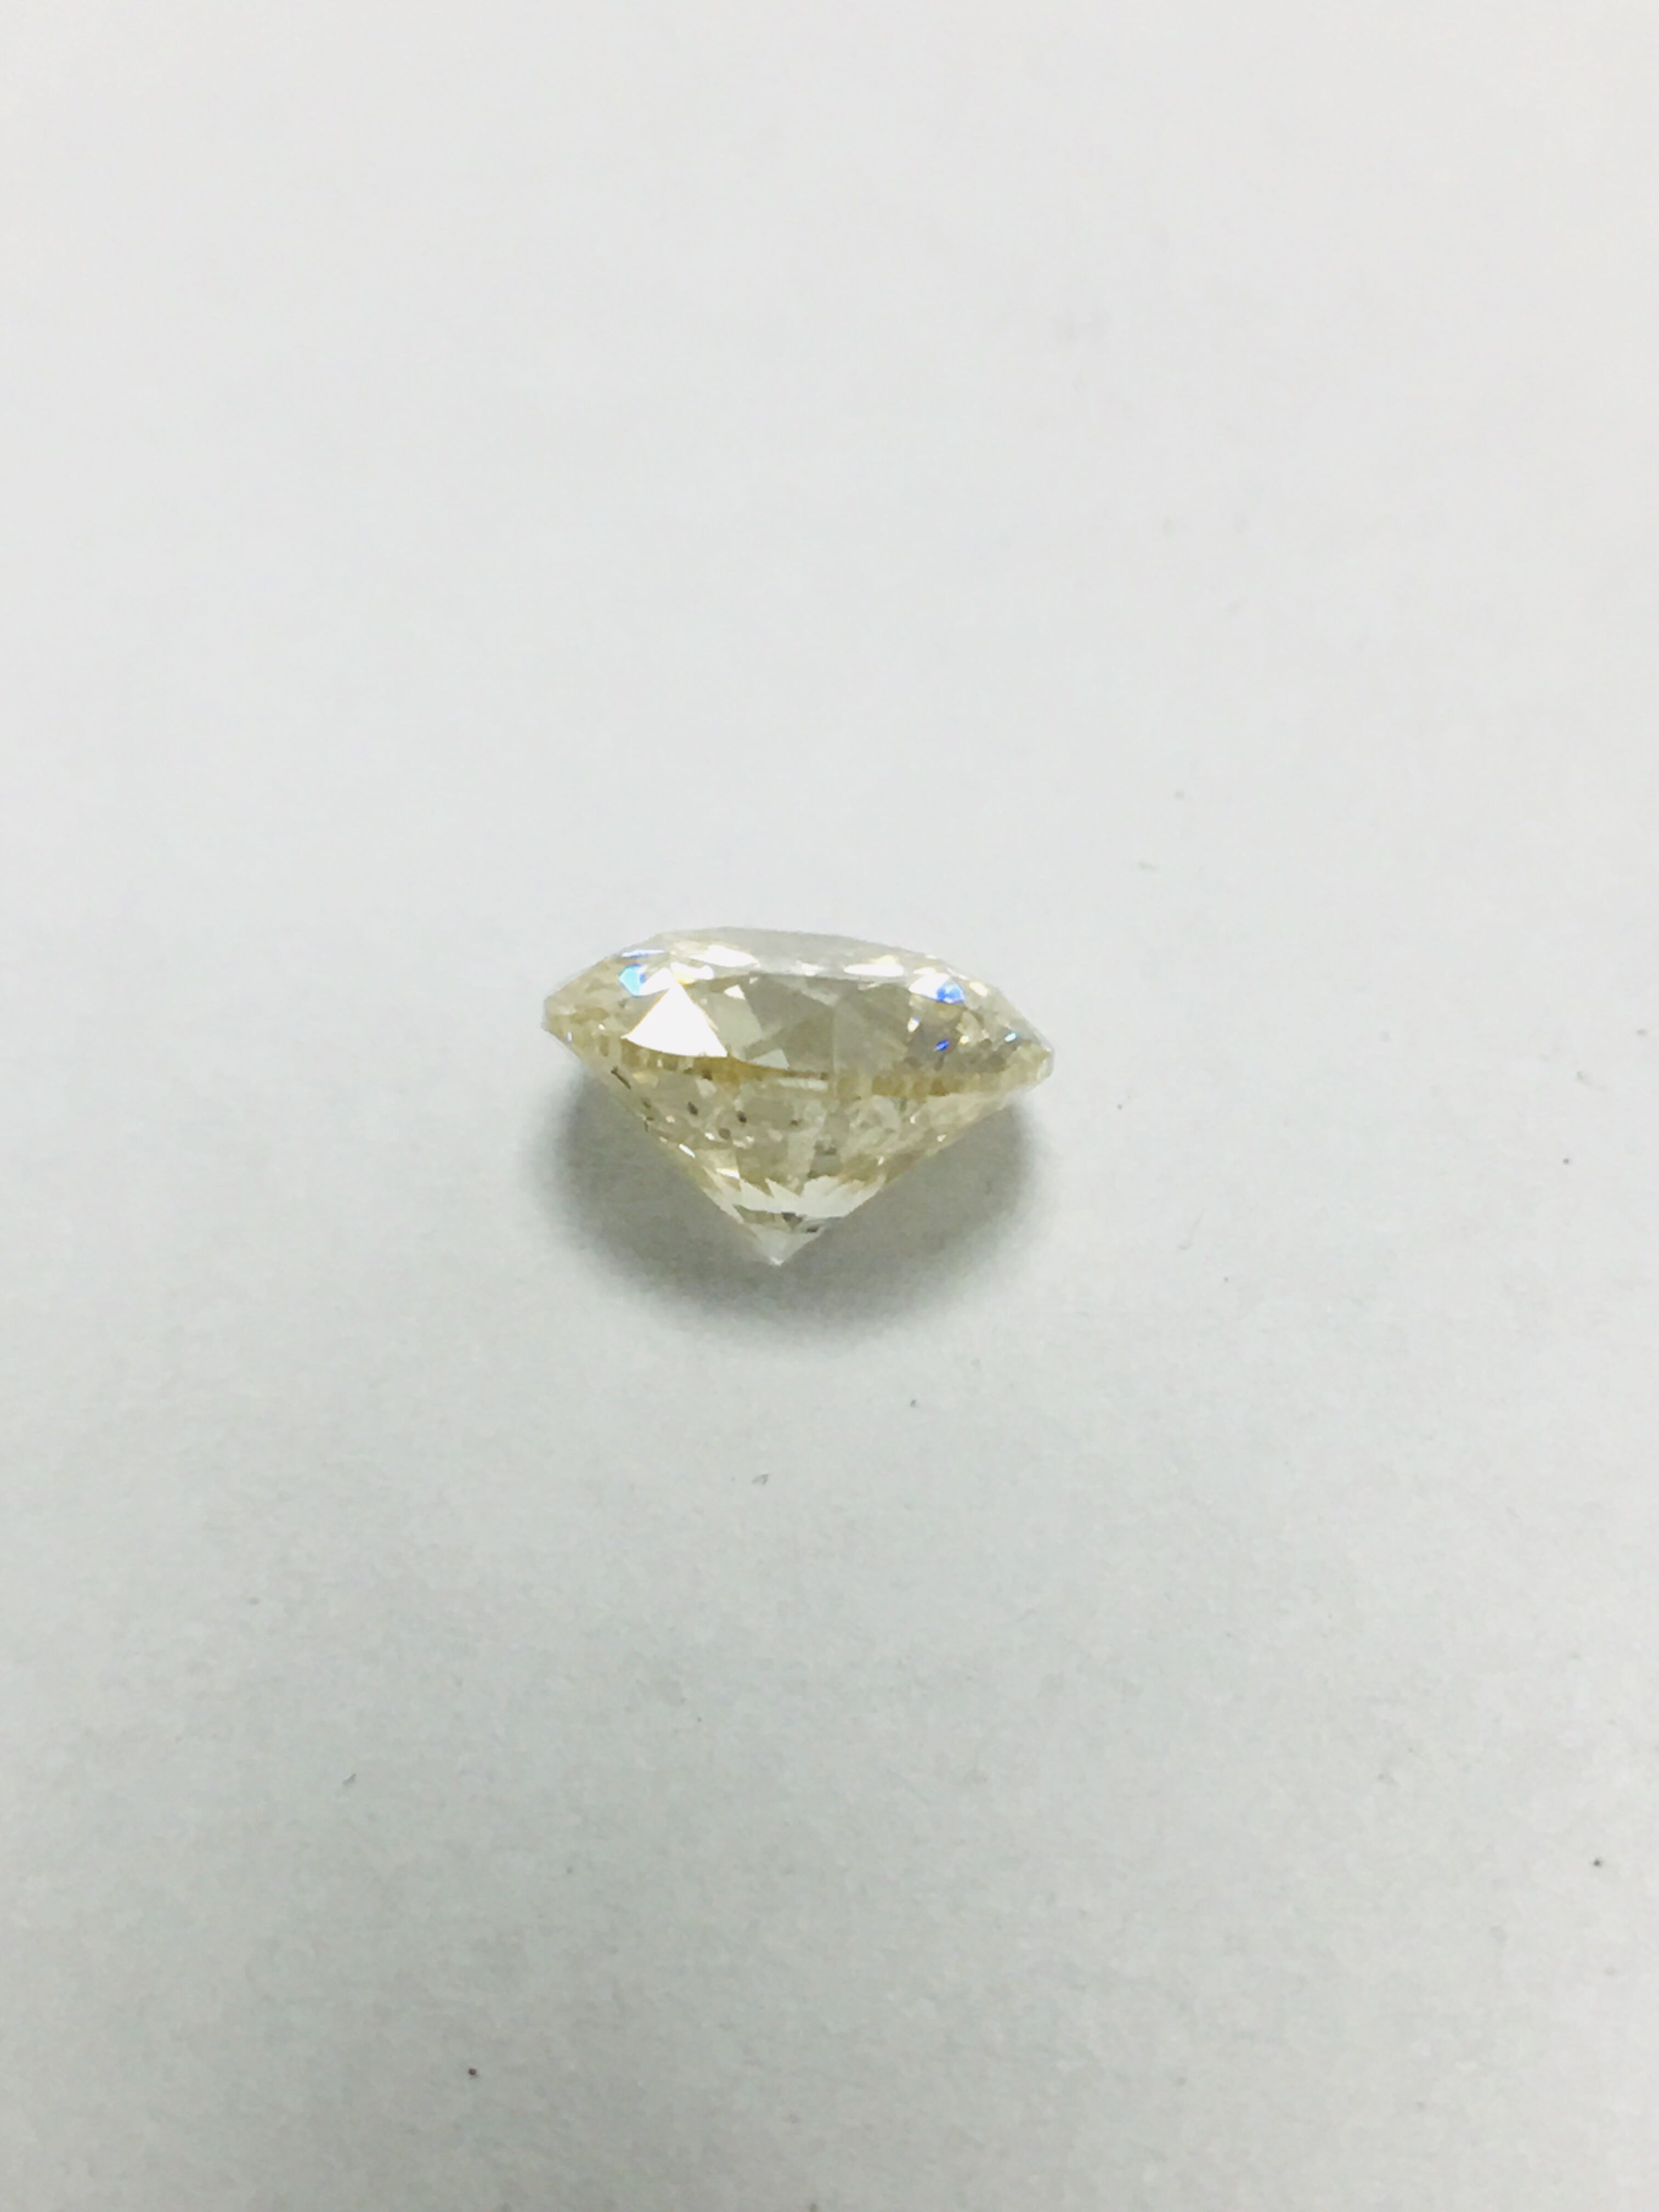 1.55ct Natural Brilliant cut DiamondSI2 clarity - Image 21 of 35